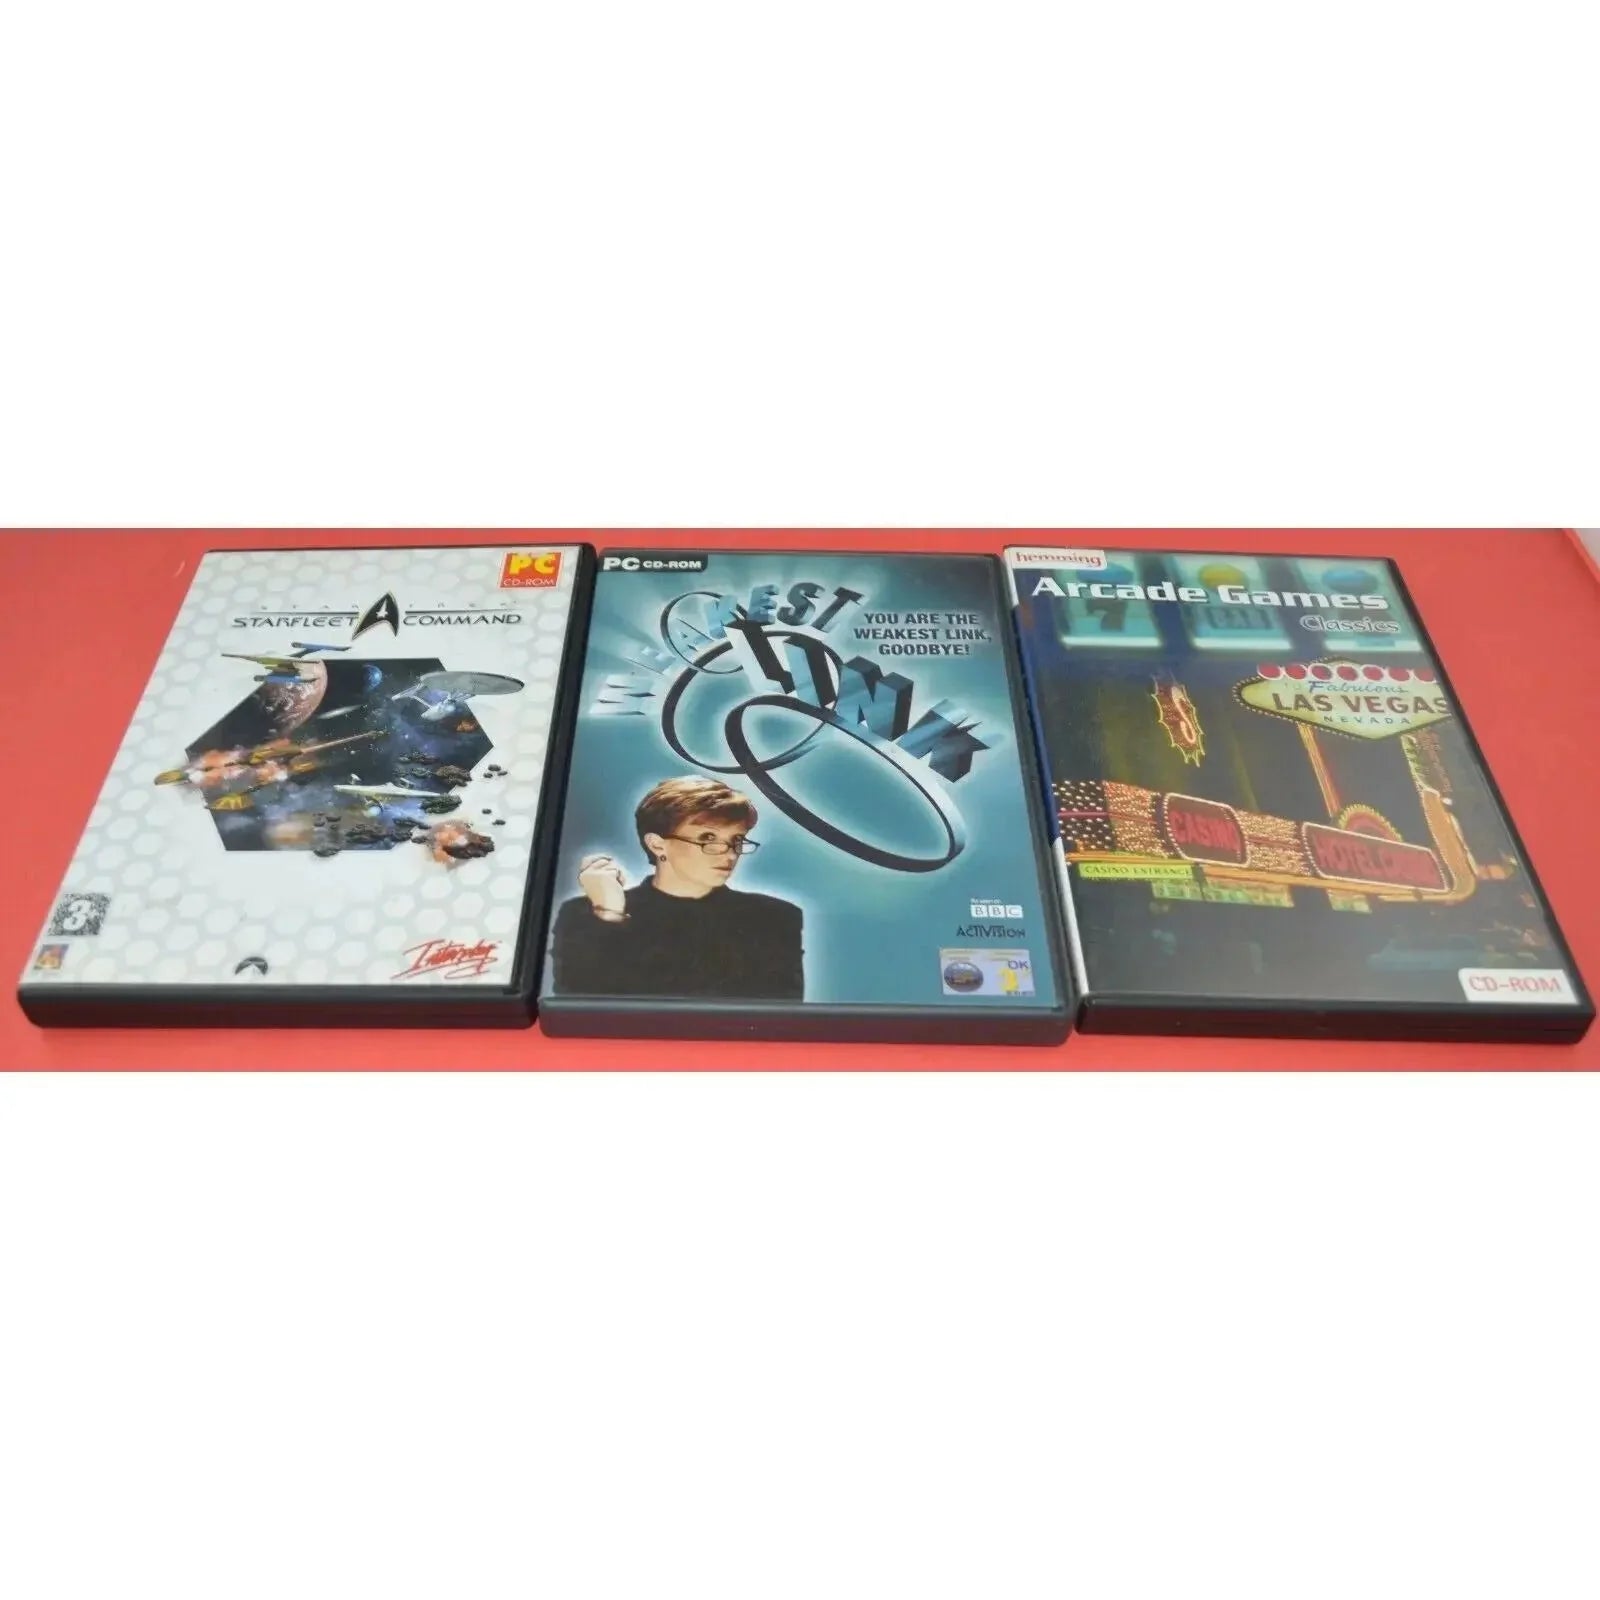 3 PC GAMES WEAKEST LINK/STAR TREK STARFLEET | CLASSIC ARCADE GAME - TMD167207